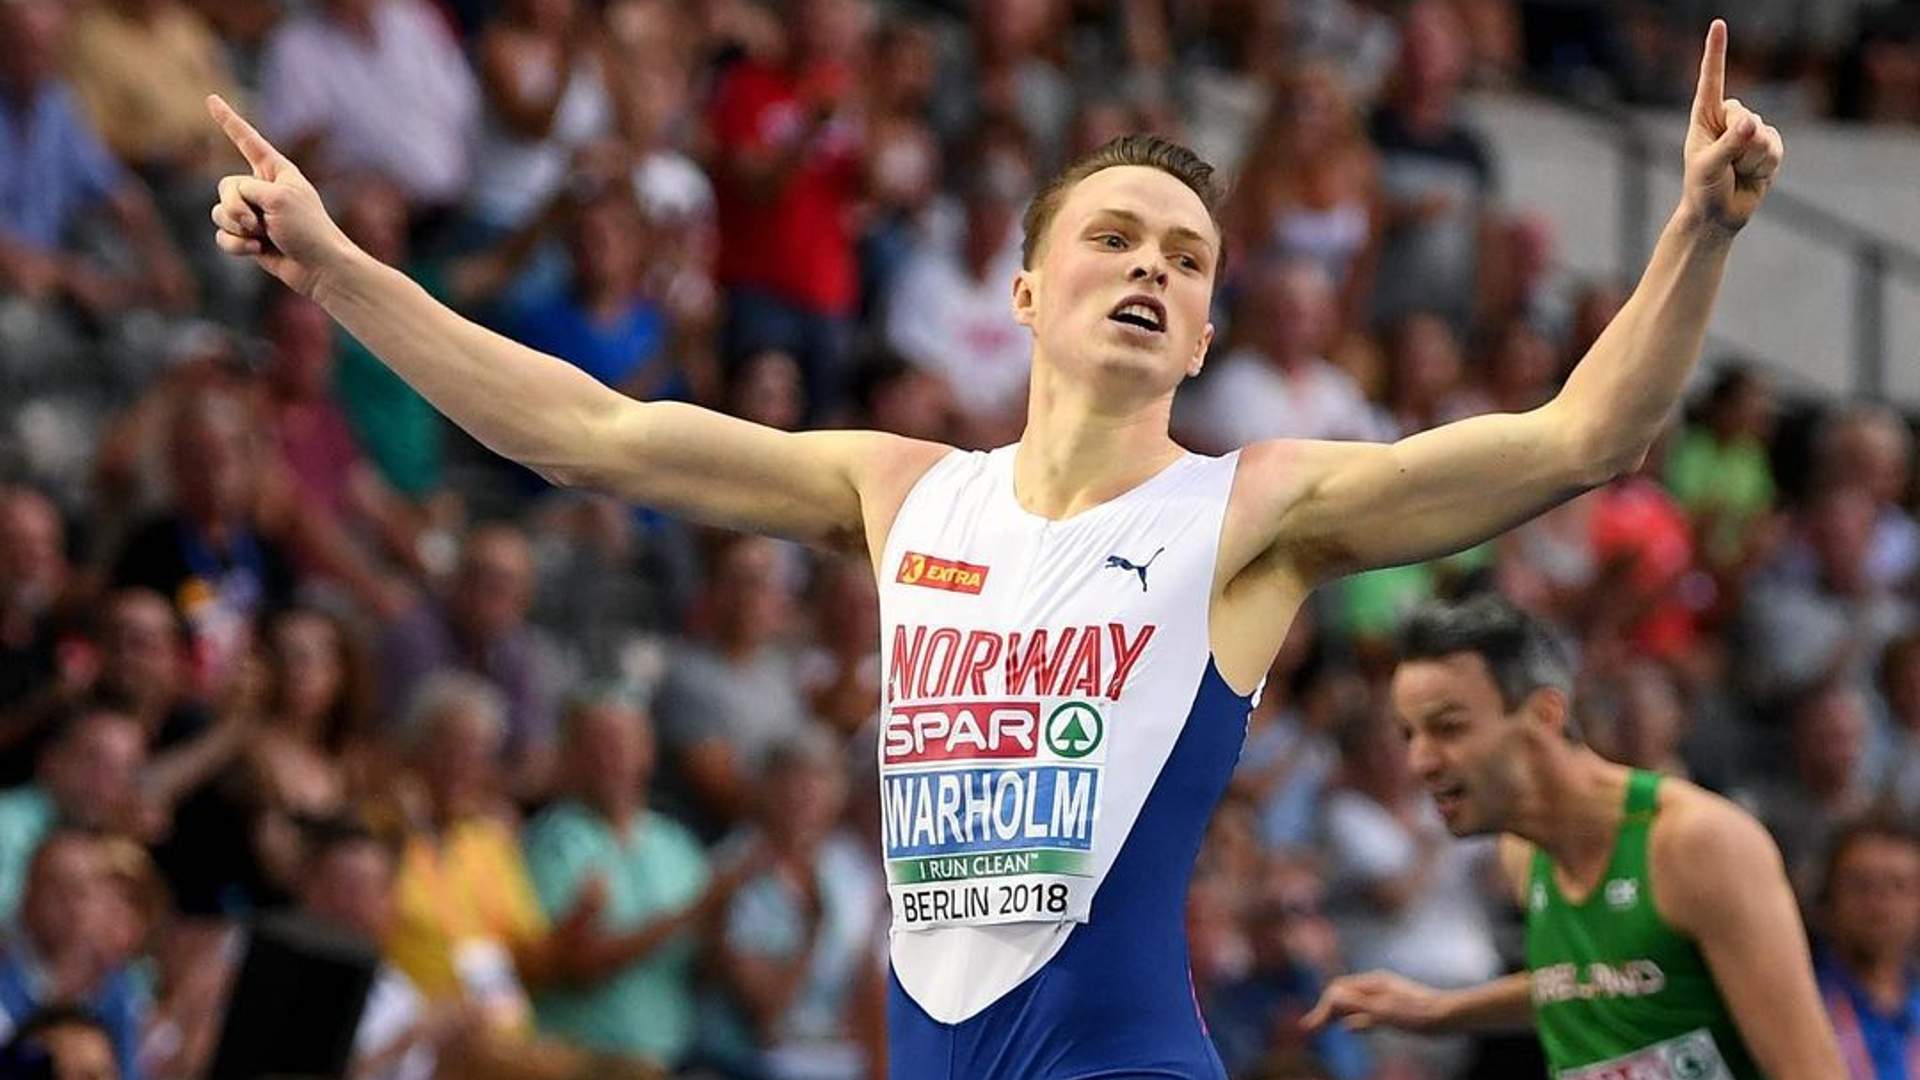 Karsten Warholm after winning the European Athletics Championships 2018 in Berlin (Image Credits - Instagram/@kwarholm)